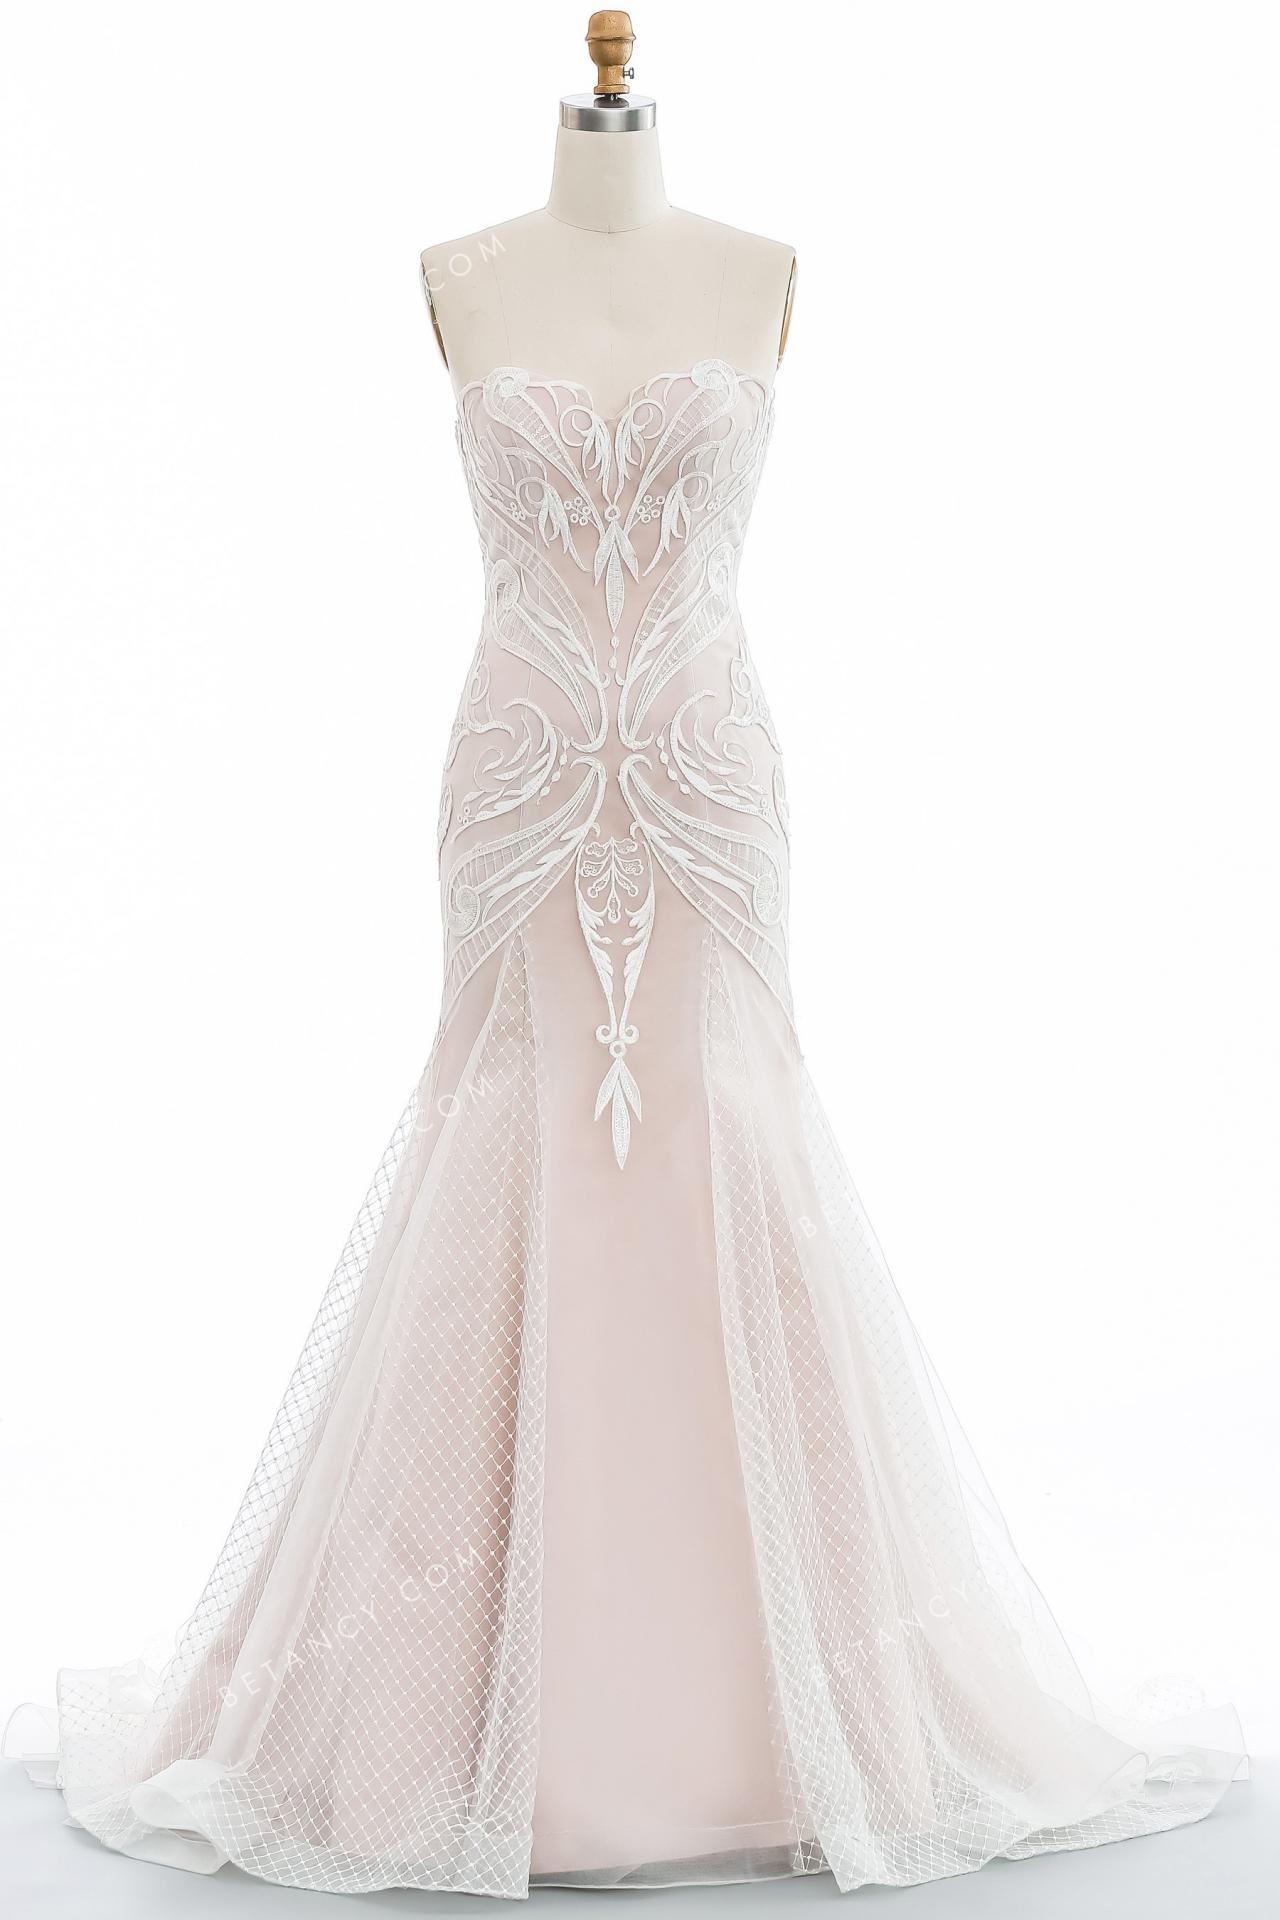 Unique geometric lace overlaid nude pink wedding dress 4